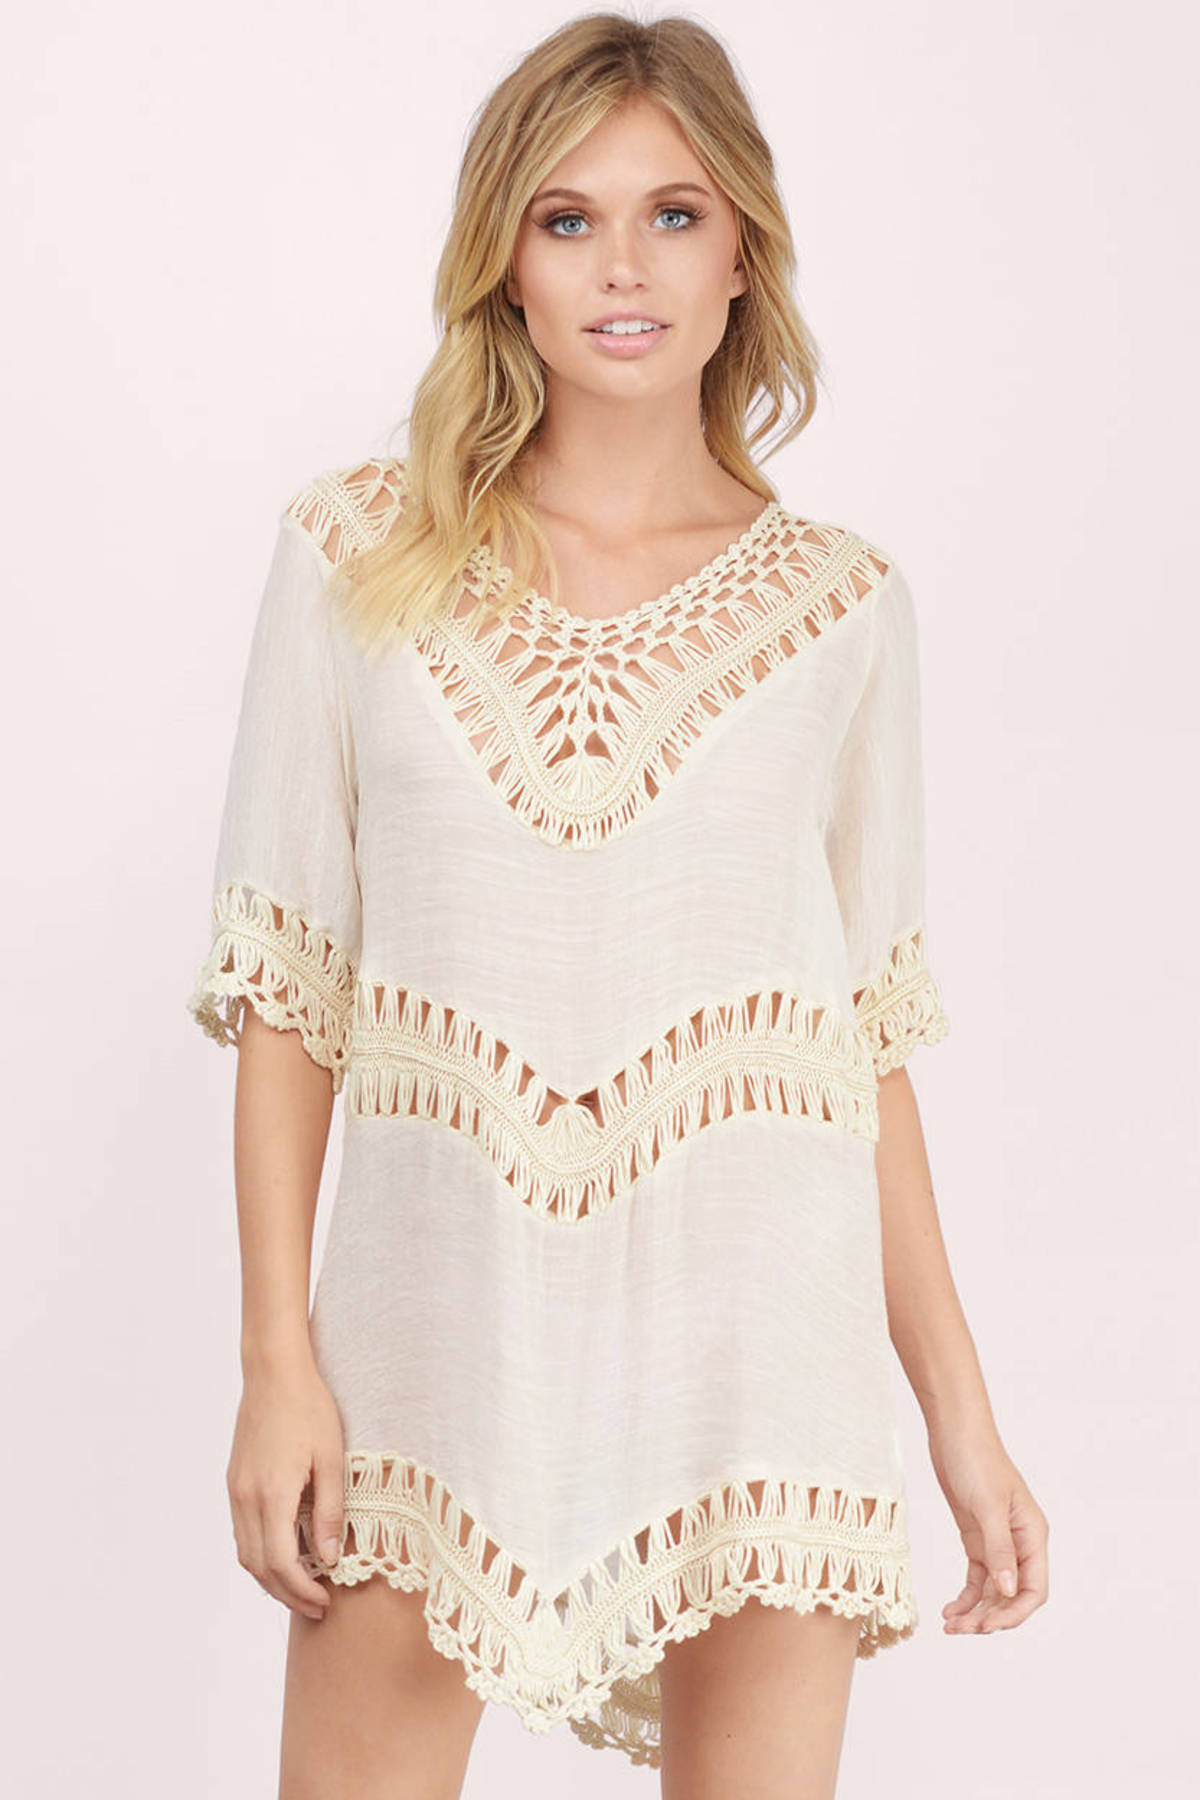 Ready Or Not Crochet Dress in Cream - $12 | Tobi US